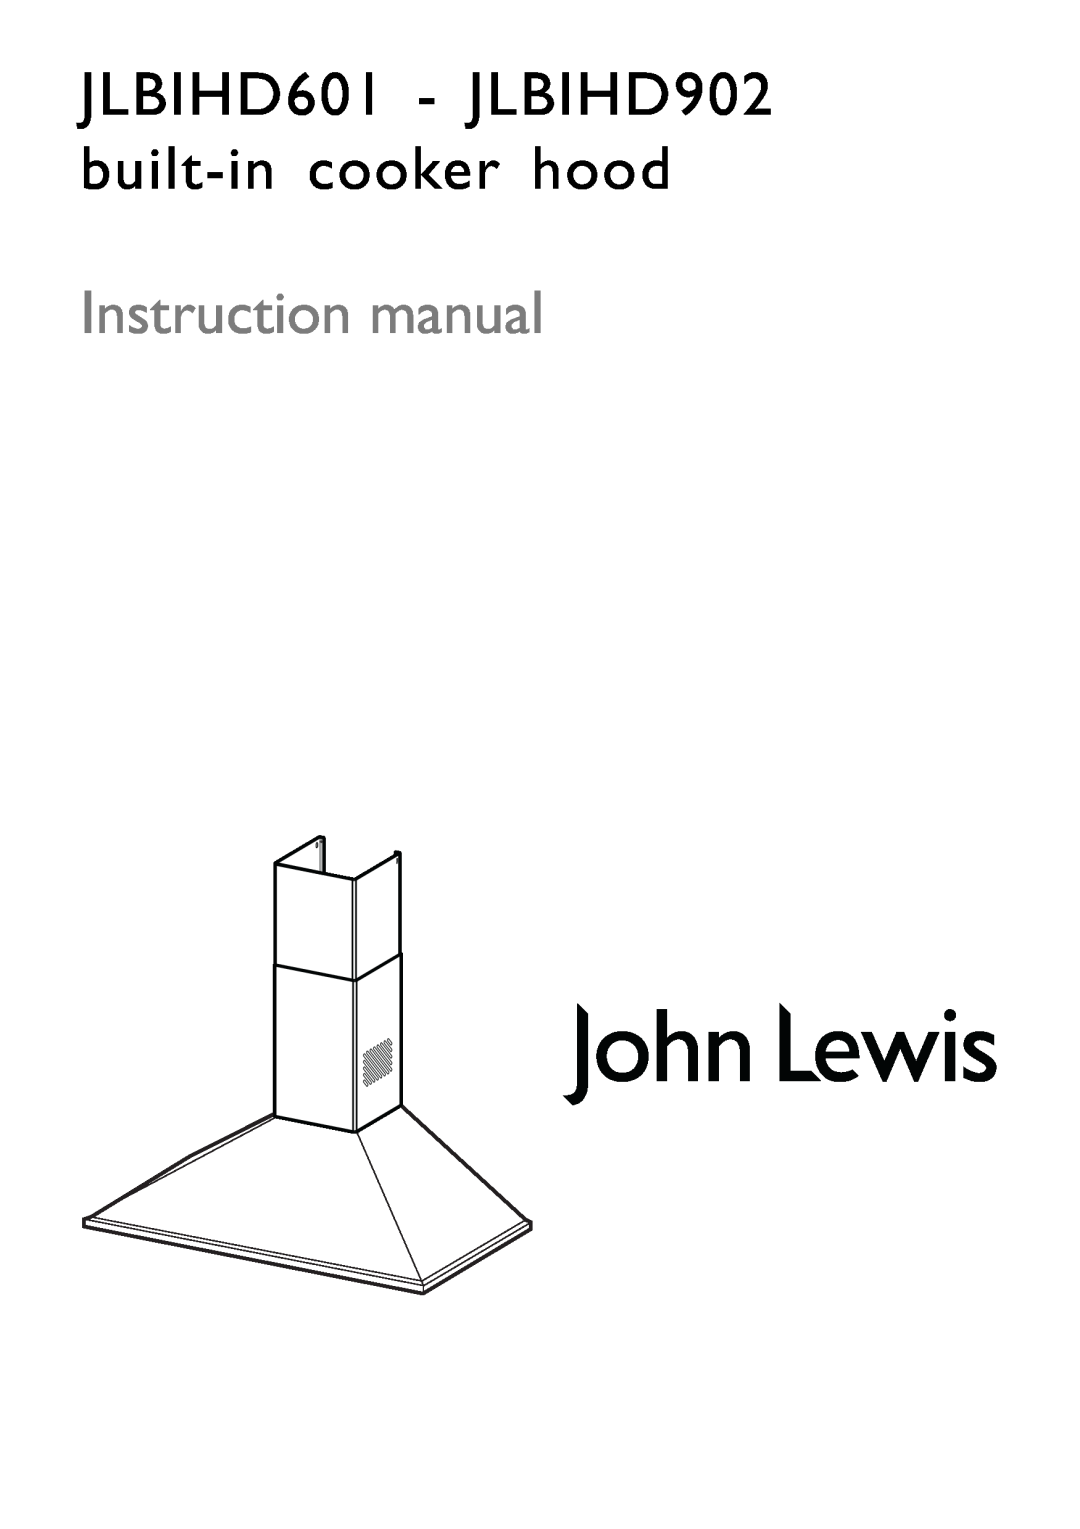 John Lewis instruction manual JLBIHD601 - JLBIHD902 built-incooker hood 